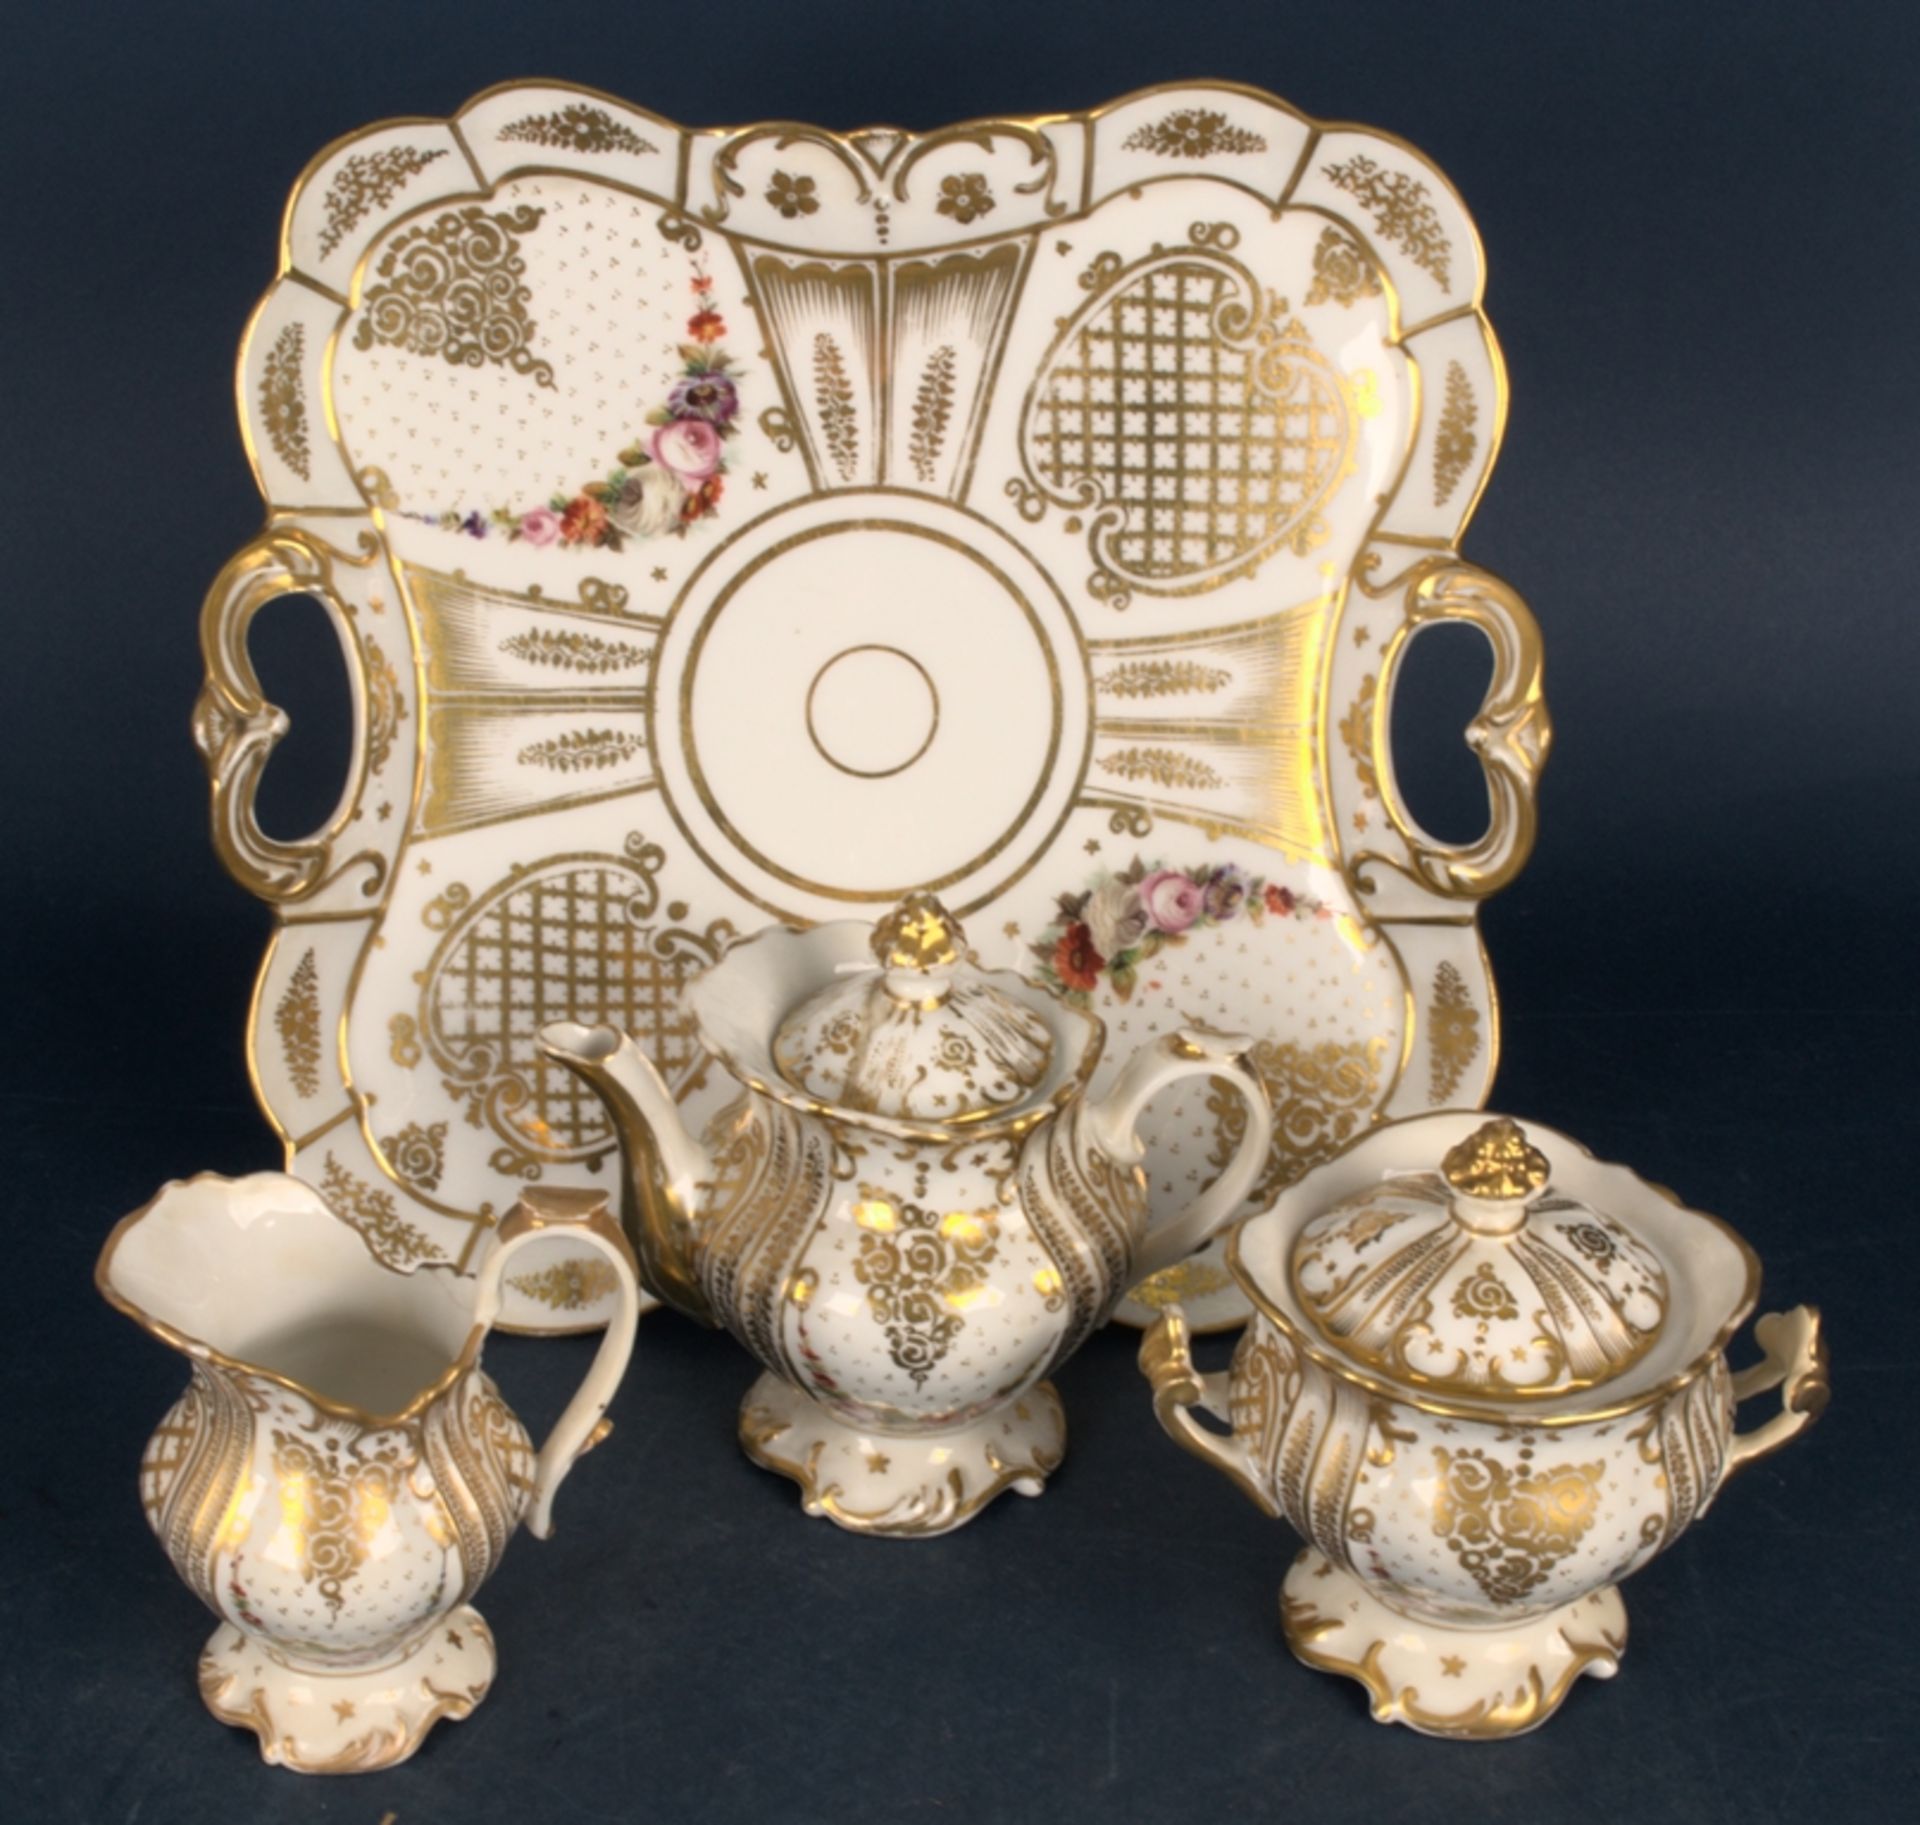 4teiliges Set, ungemarktes Weißporzellan mit polychromem Floral - & üppigem Golddekor; Belle - Image 2 of 16